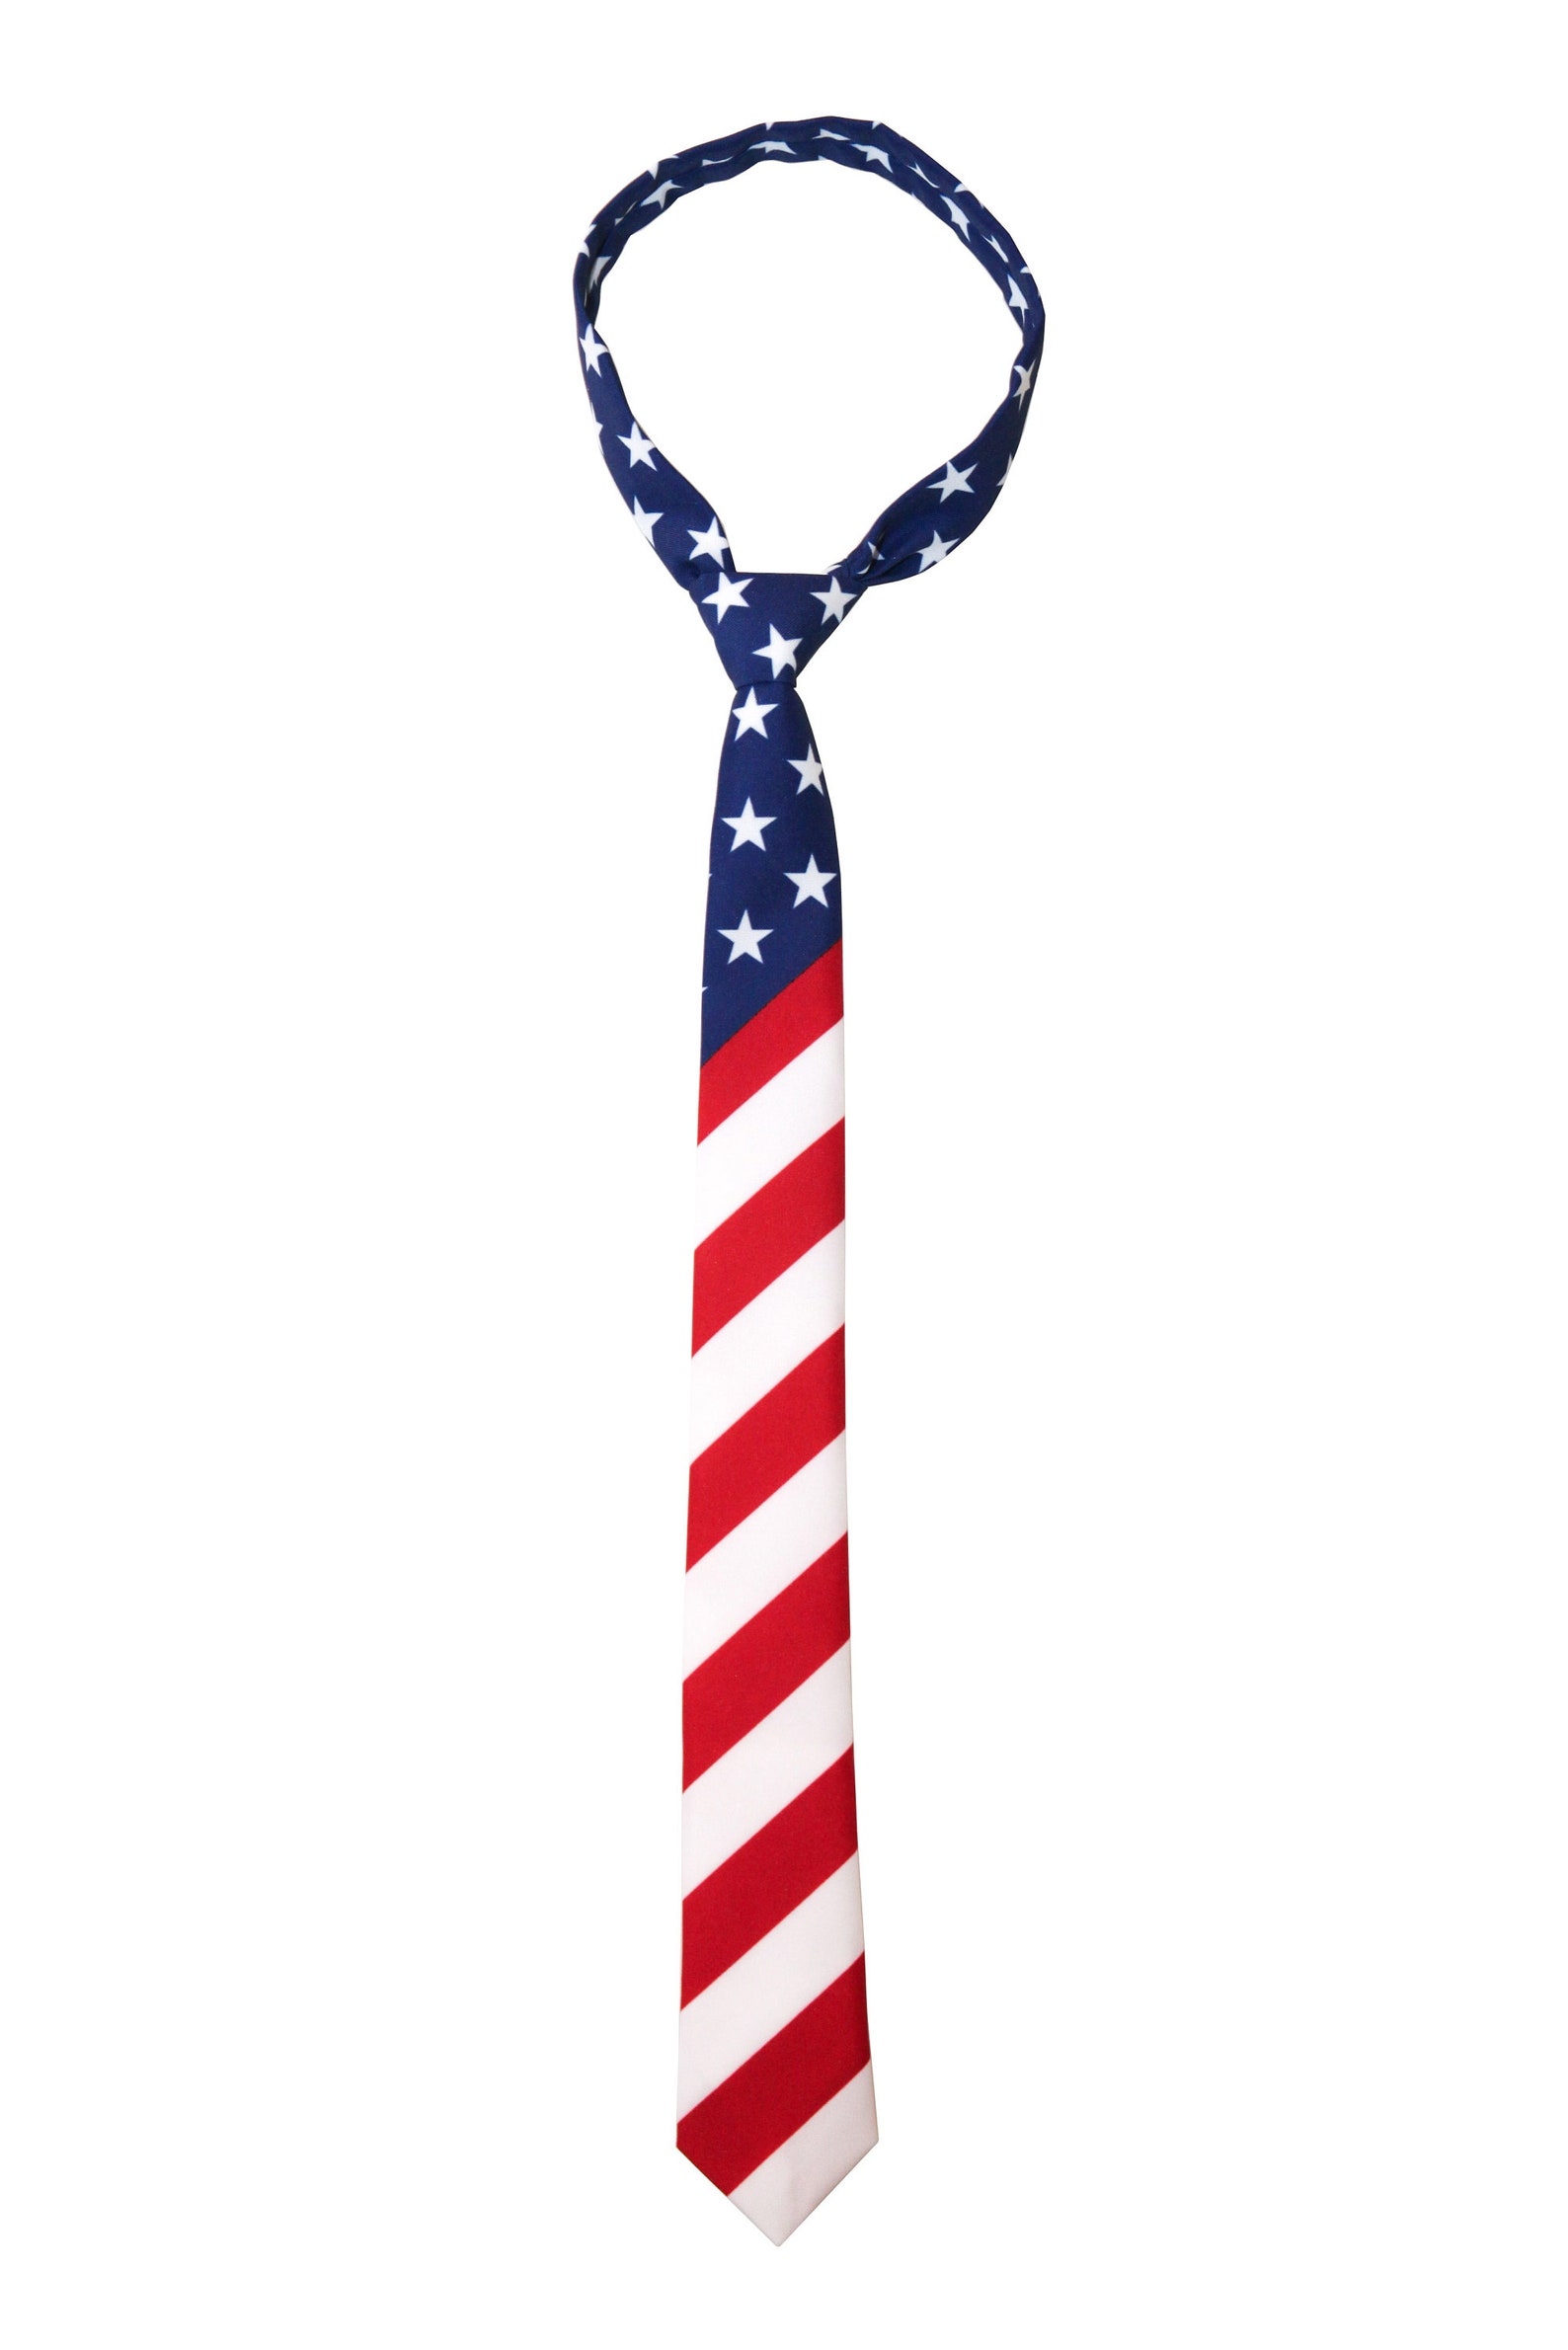 USA Necktie Patriotic Tie American Flag Stars and | Etsy